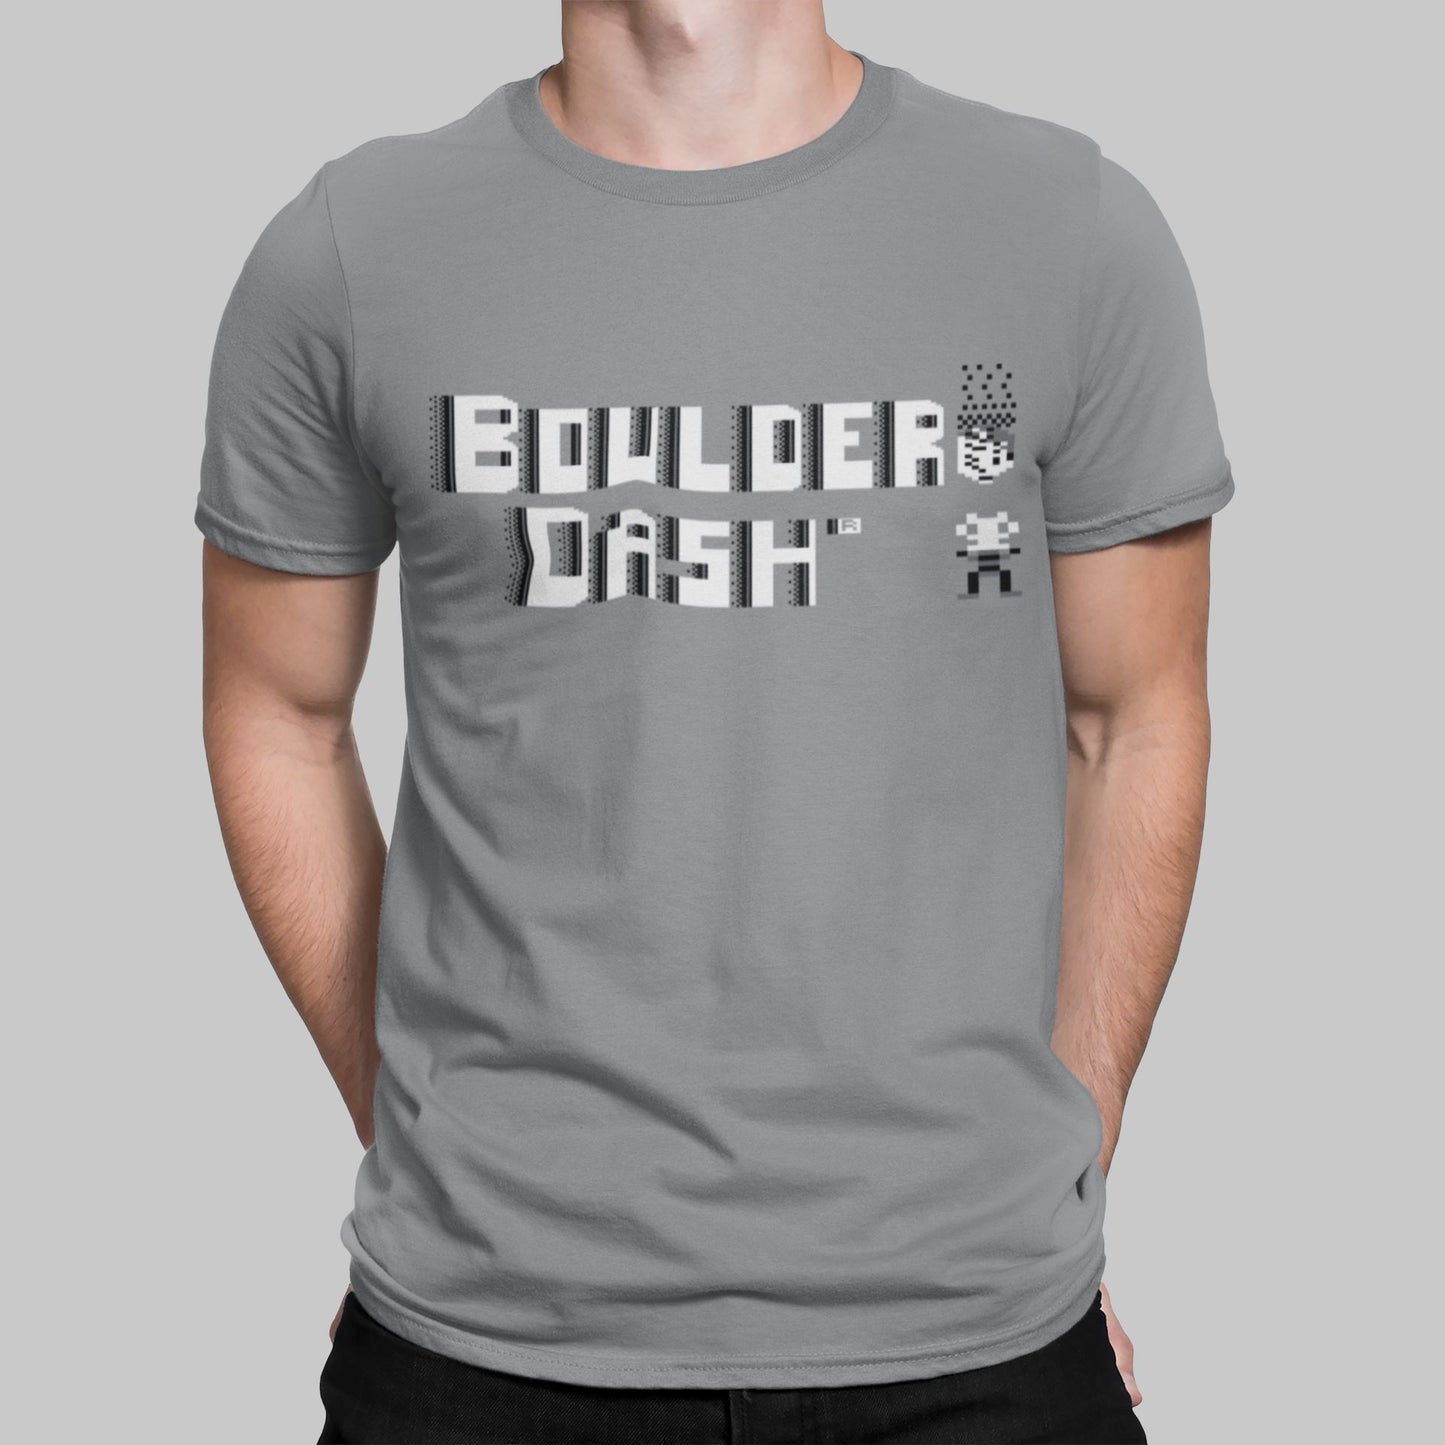 Boulder Dash Black Retro Gaming T-Shirt T-Shirt Seven Squared Small 34-36" Sport Grey 